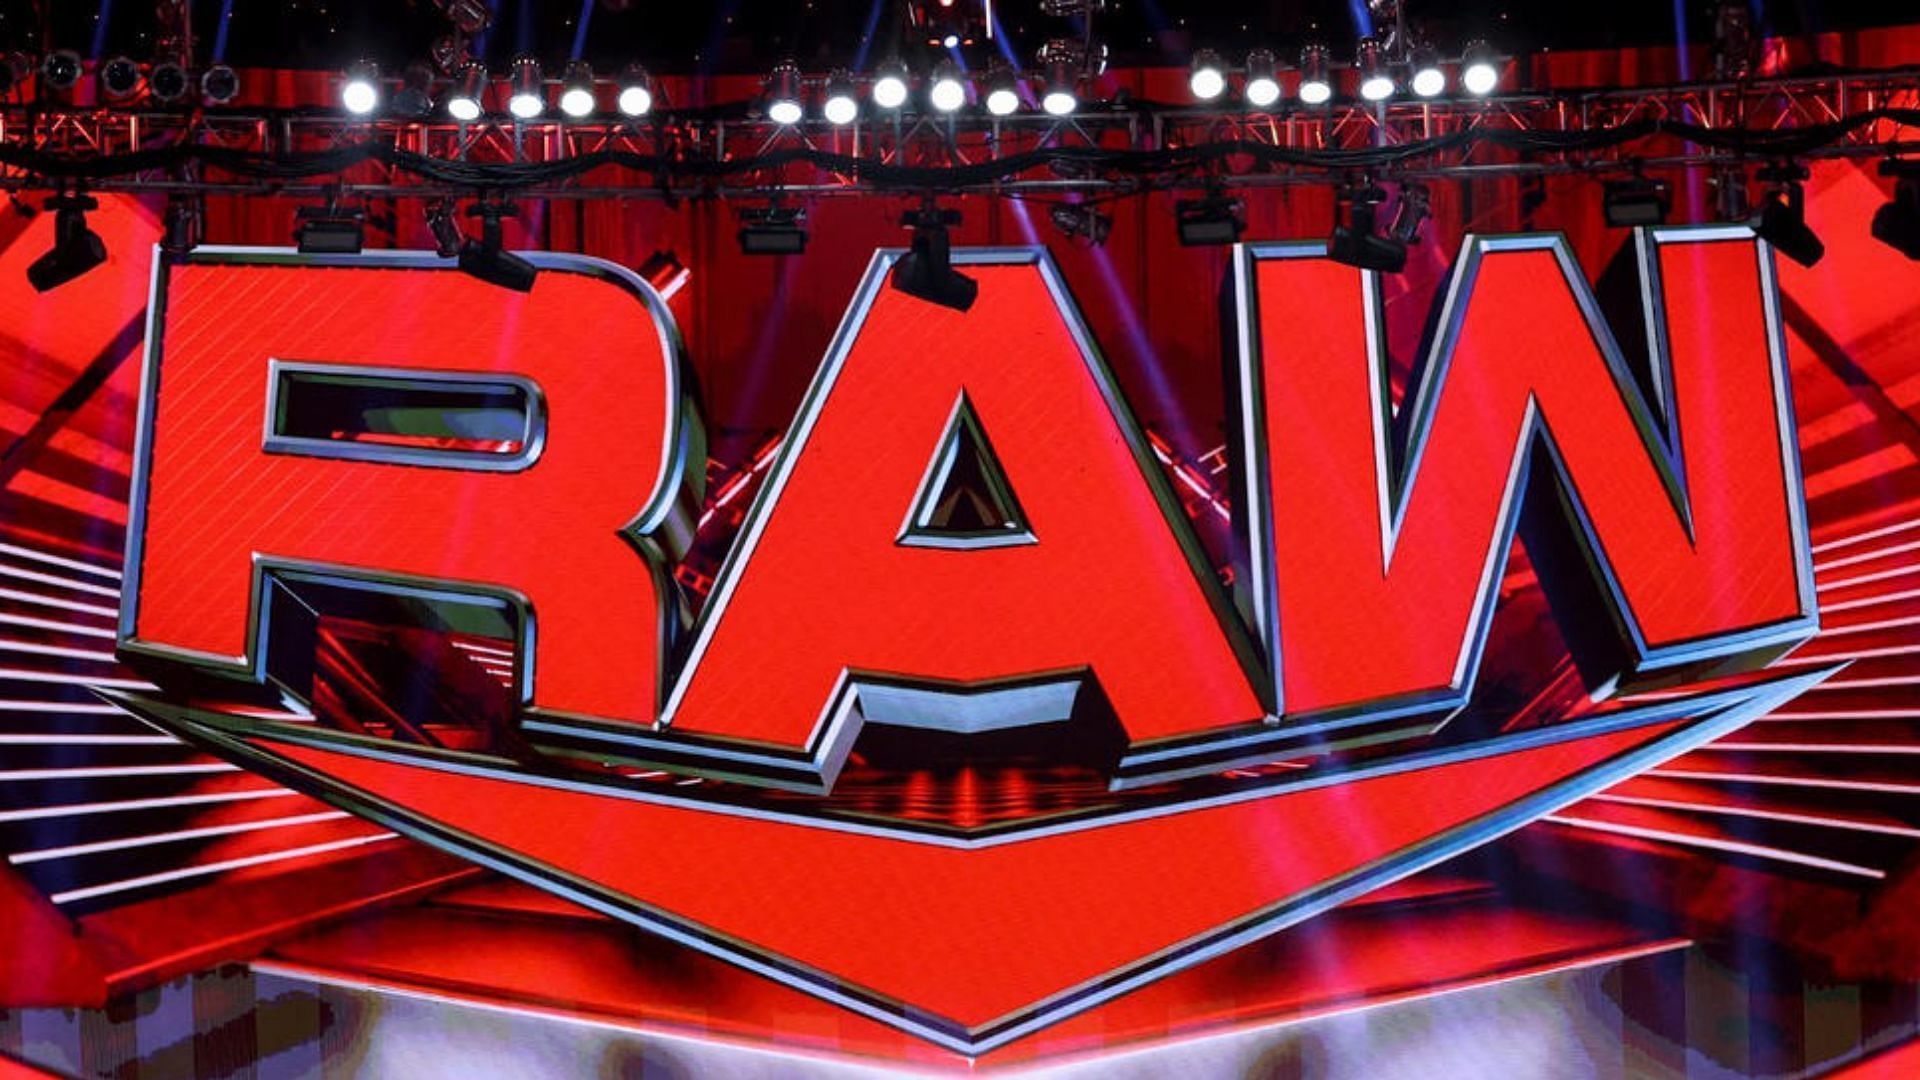 Monday Night RAW is WWE